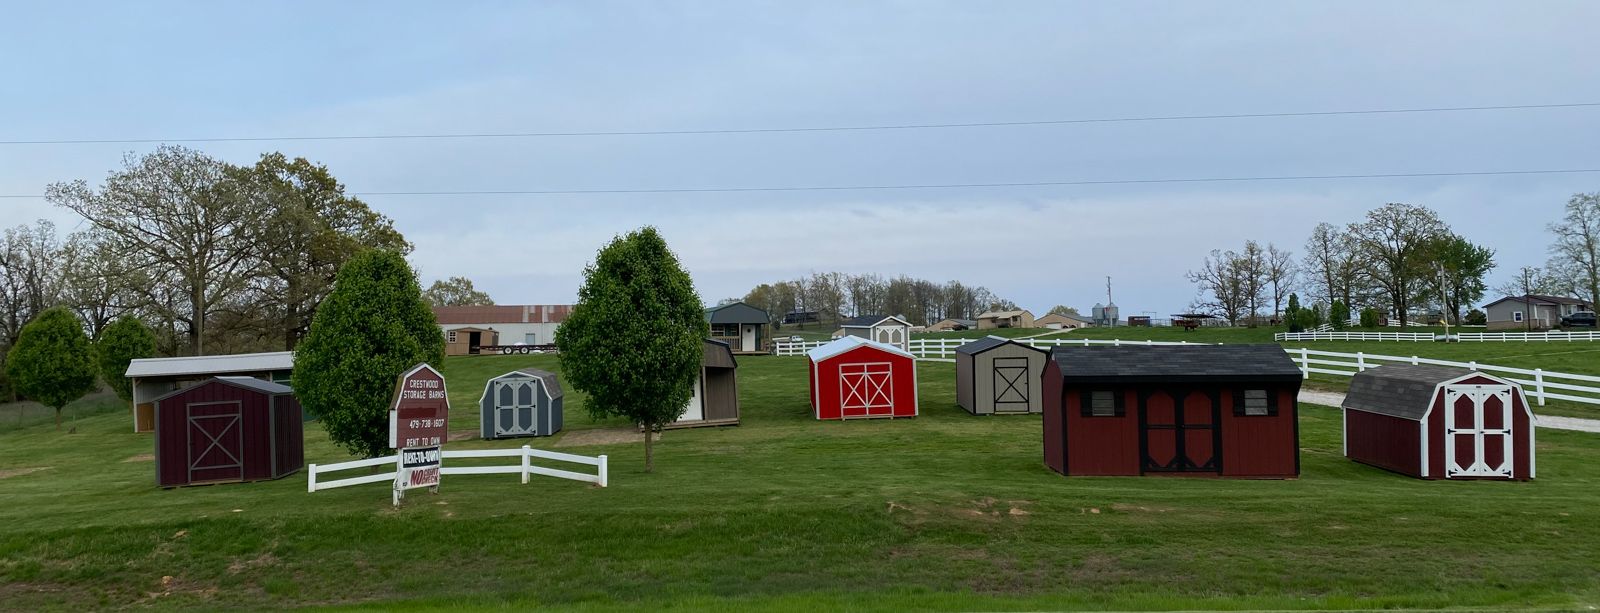 crestwood storage barns best sheds in northwest arkansas